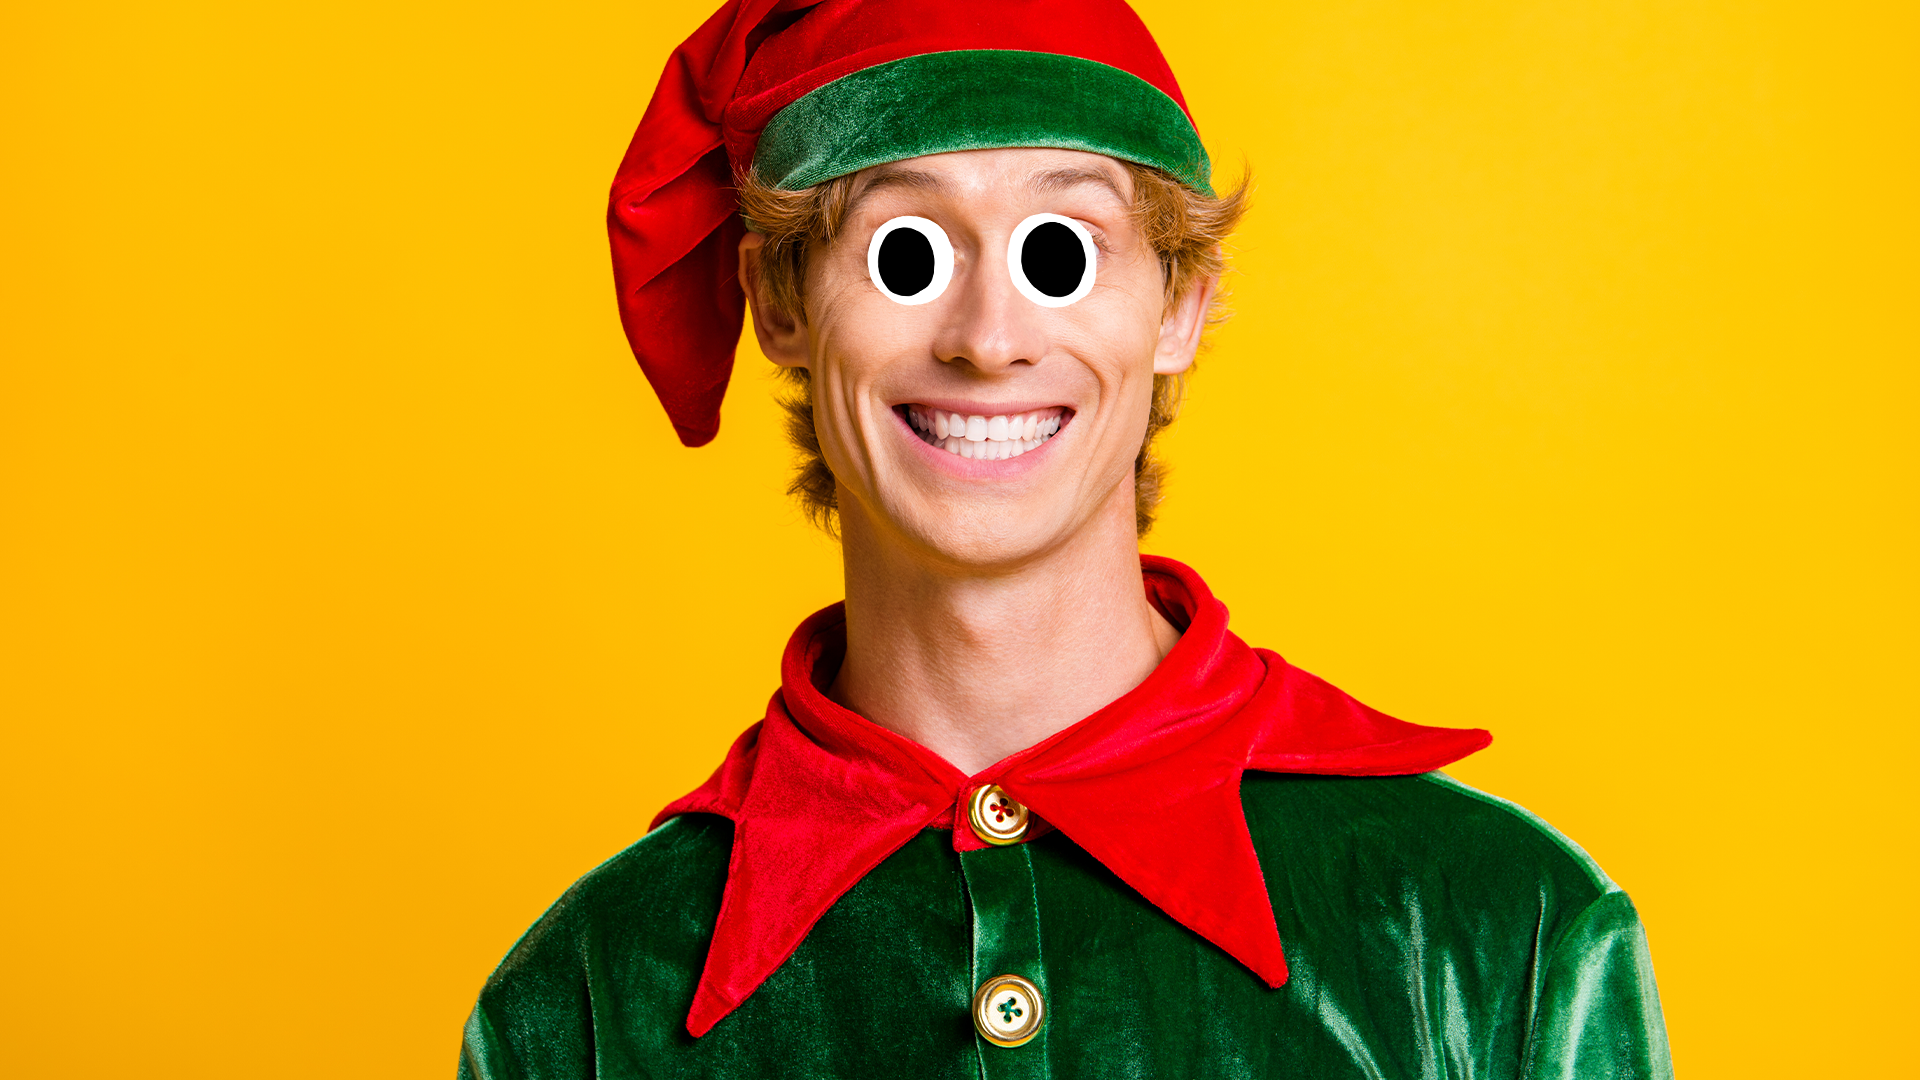 Smiley elf man